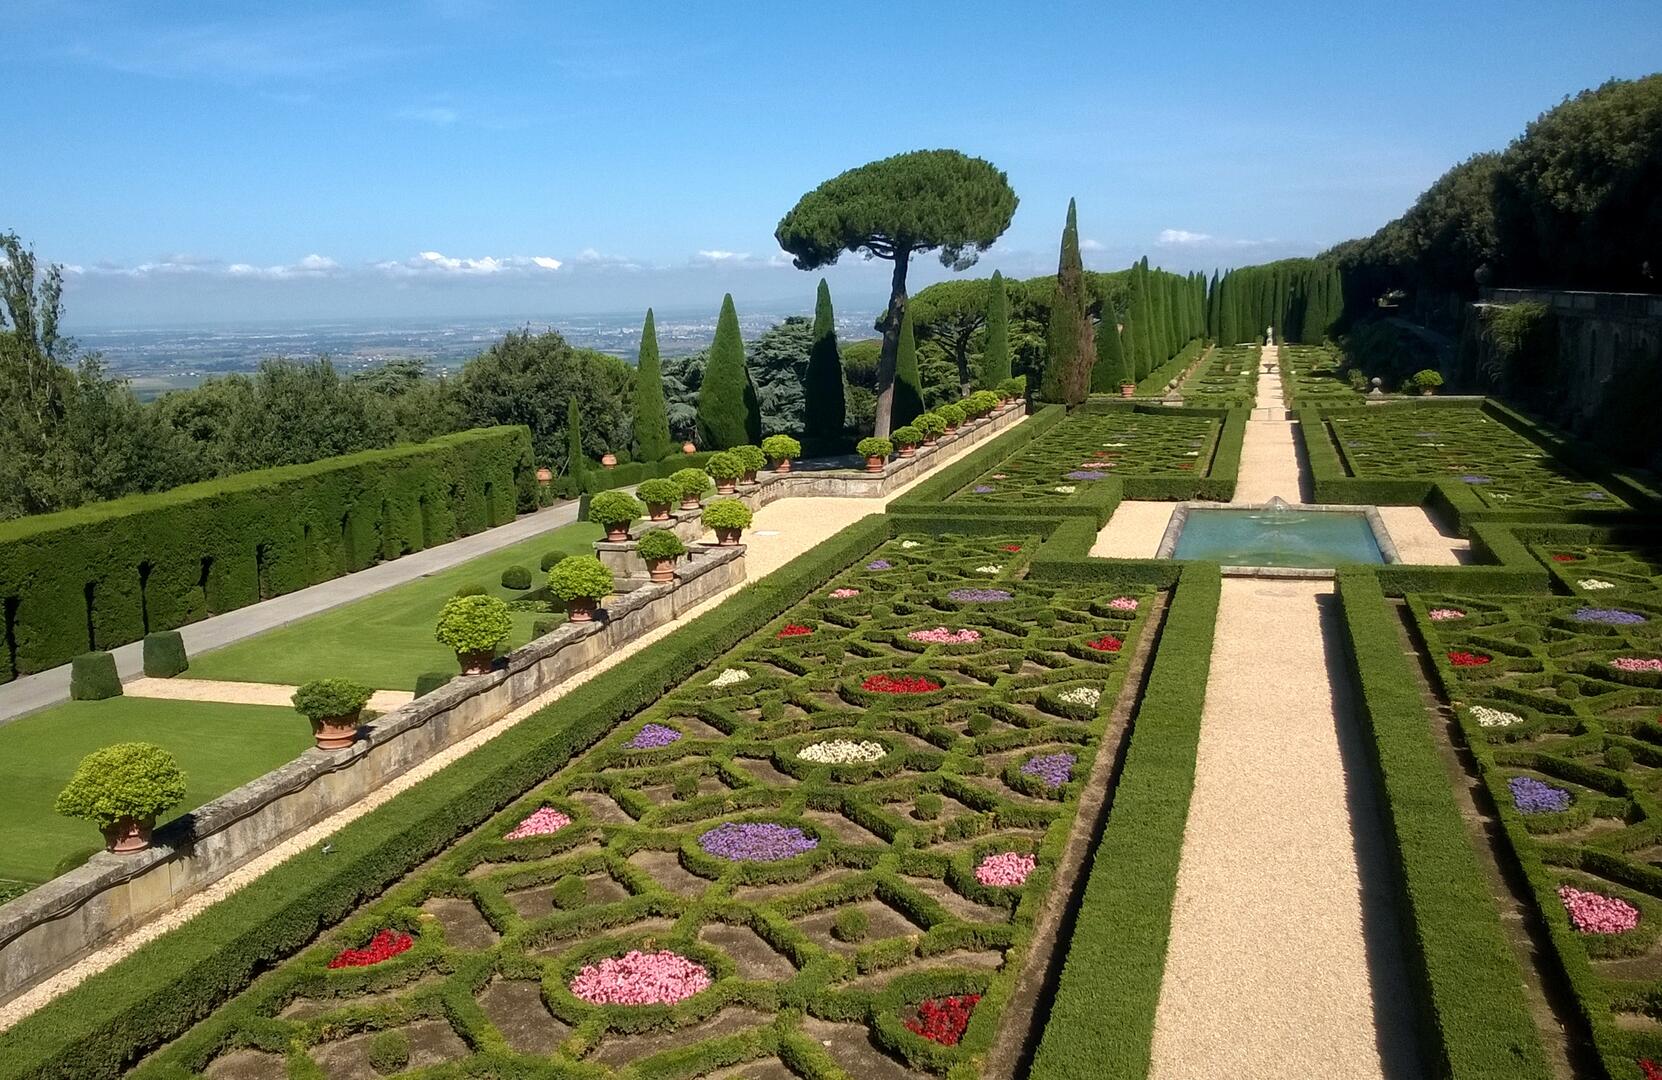 The gardens at Castel Gandolfo